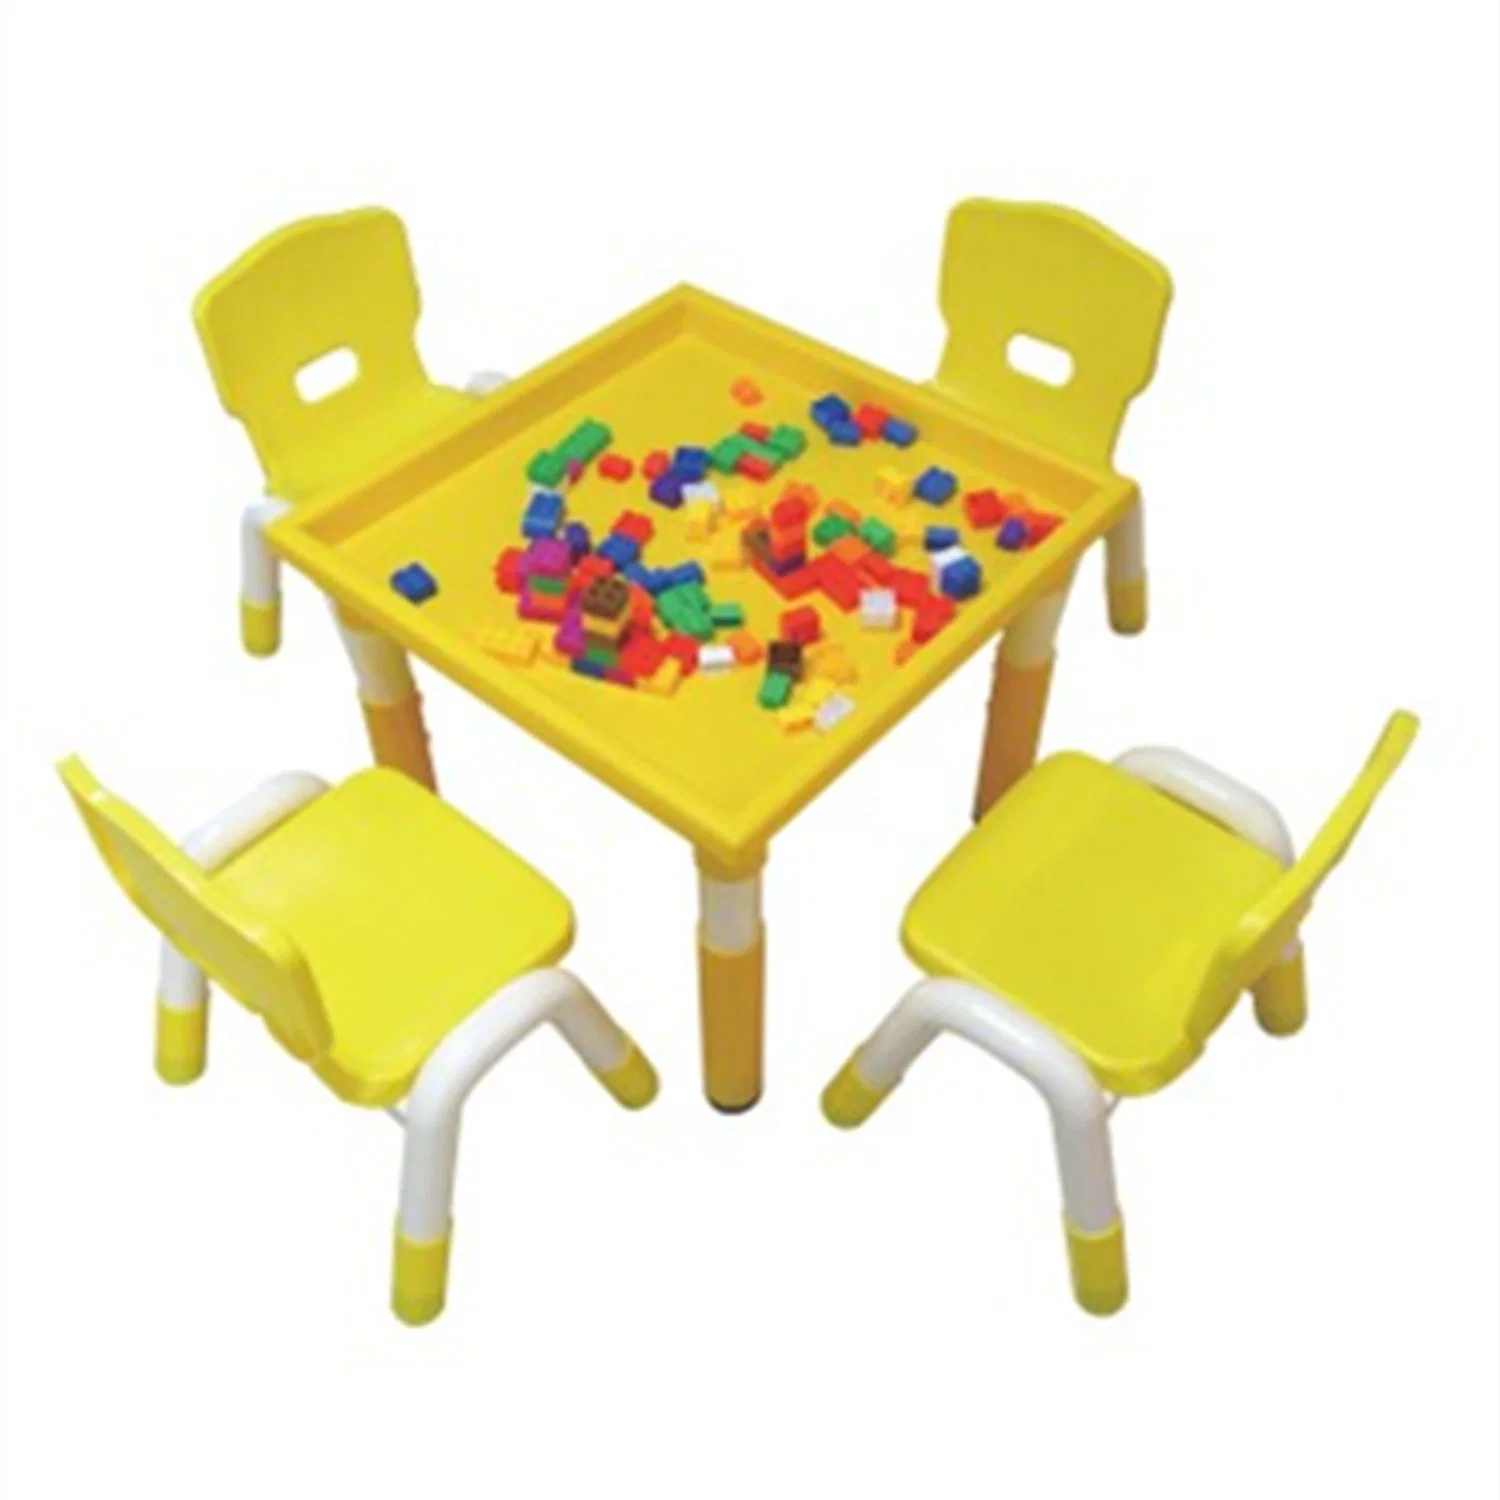 Kindergarten Kids Tables and Chairs Children's Plastic Building Blocks Yellow